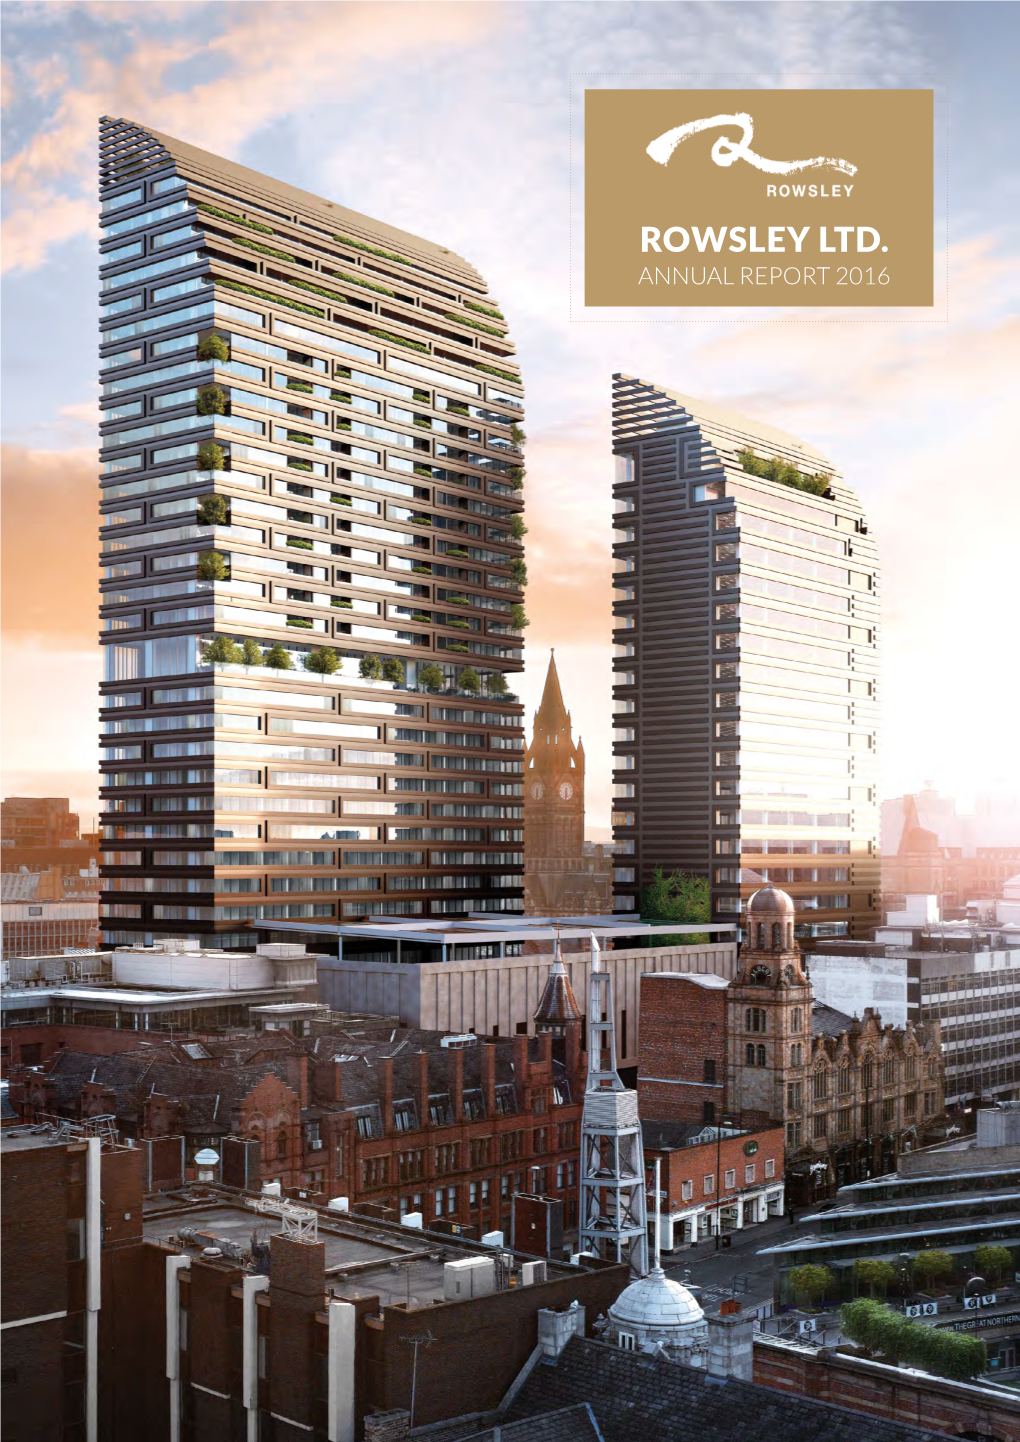 Rowsley Ltd. Annual Report 2016